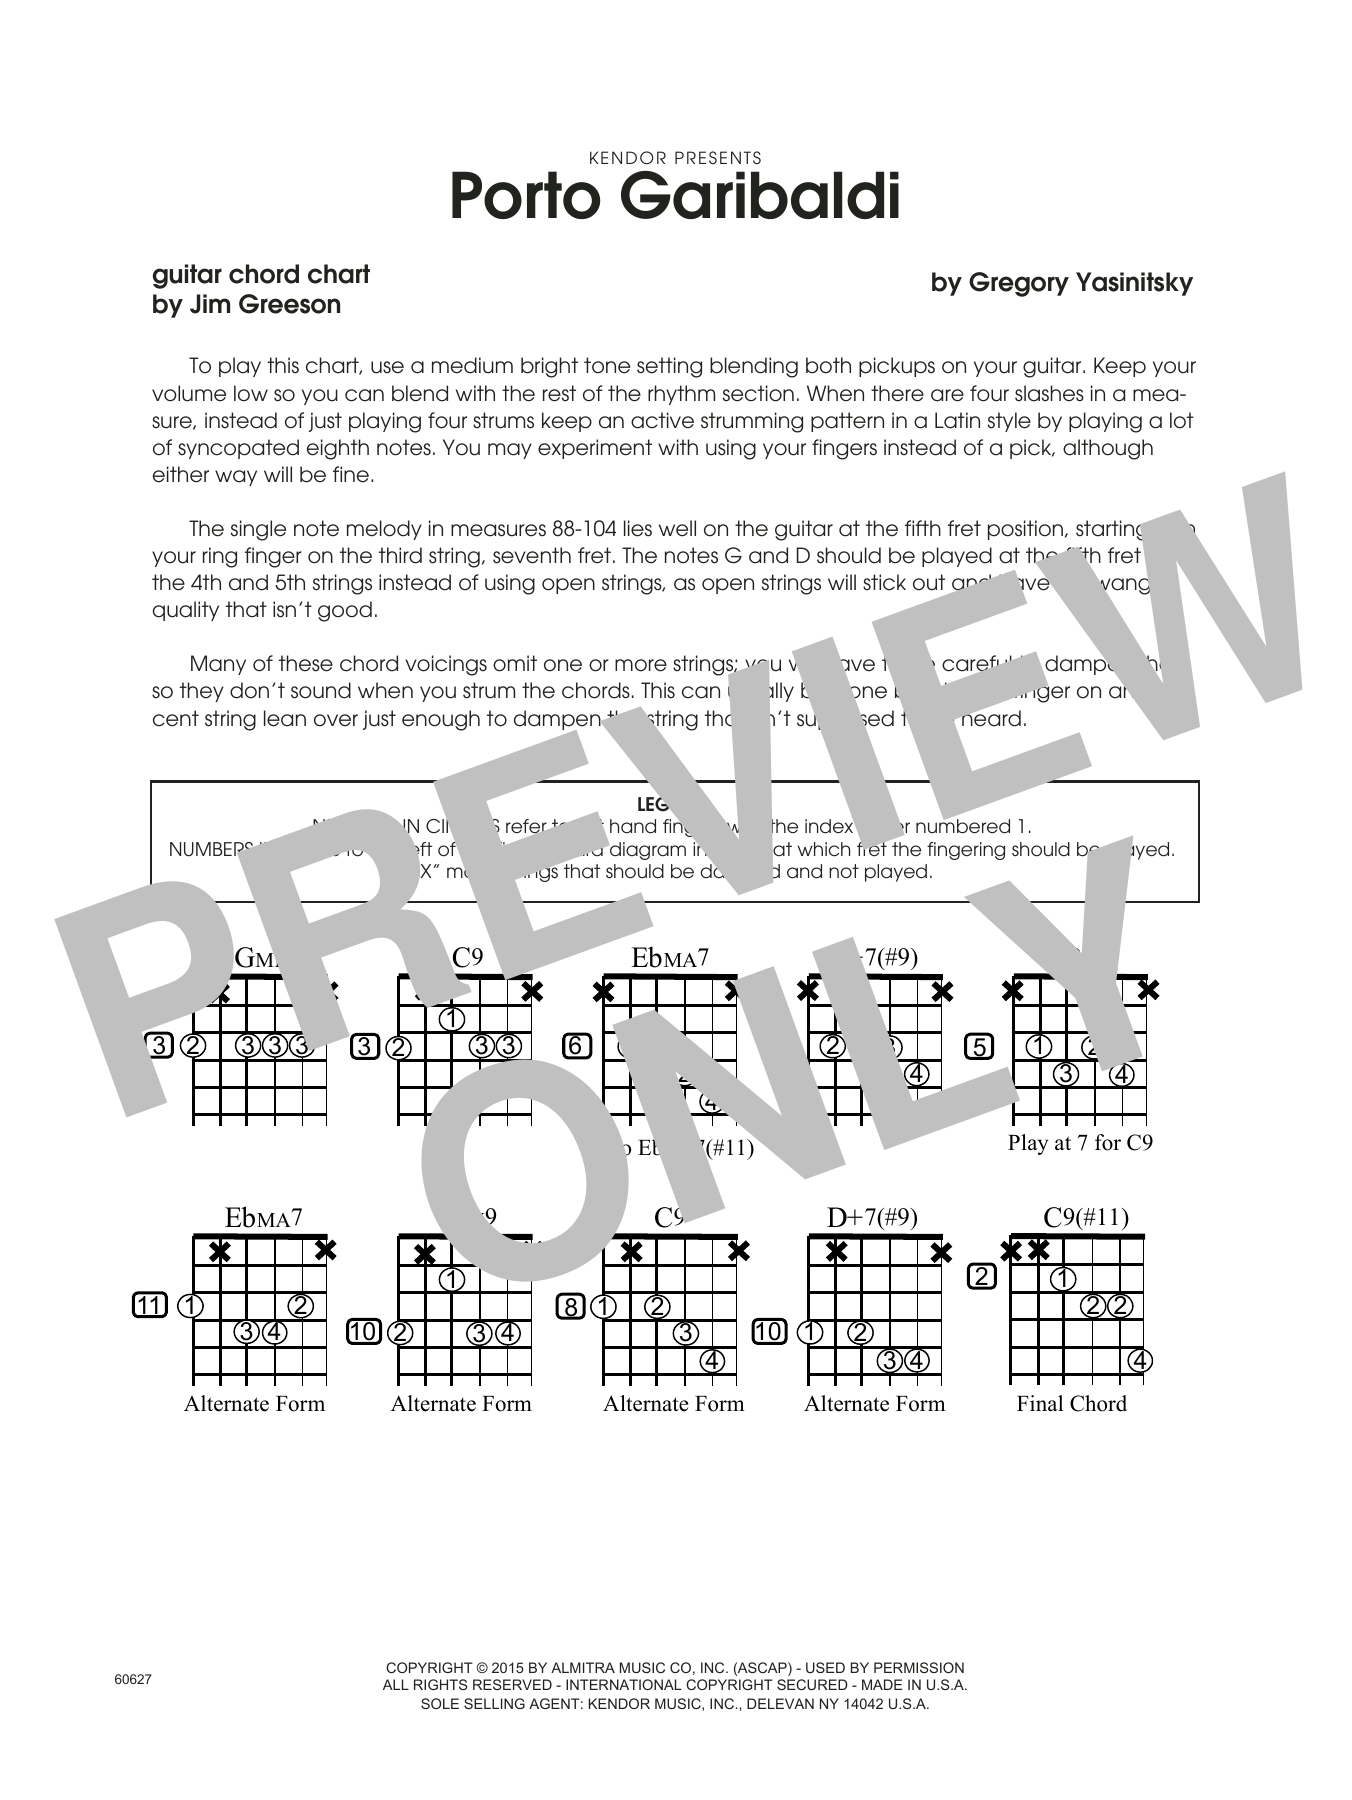 Download Gregory Yasinitsky Porto Garibaldi - Guitar Chord Chart Sheet Music